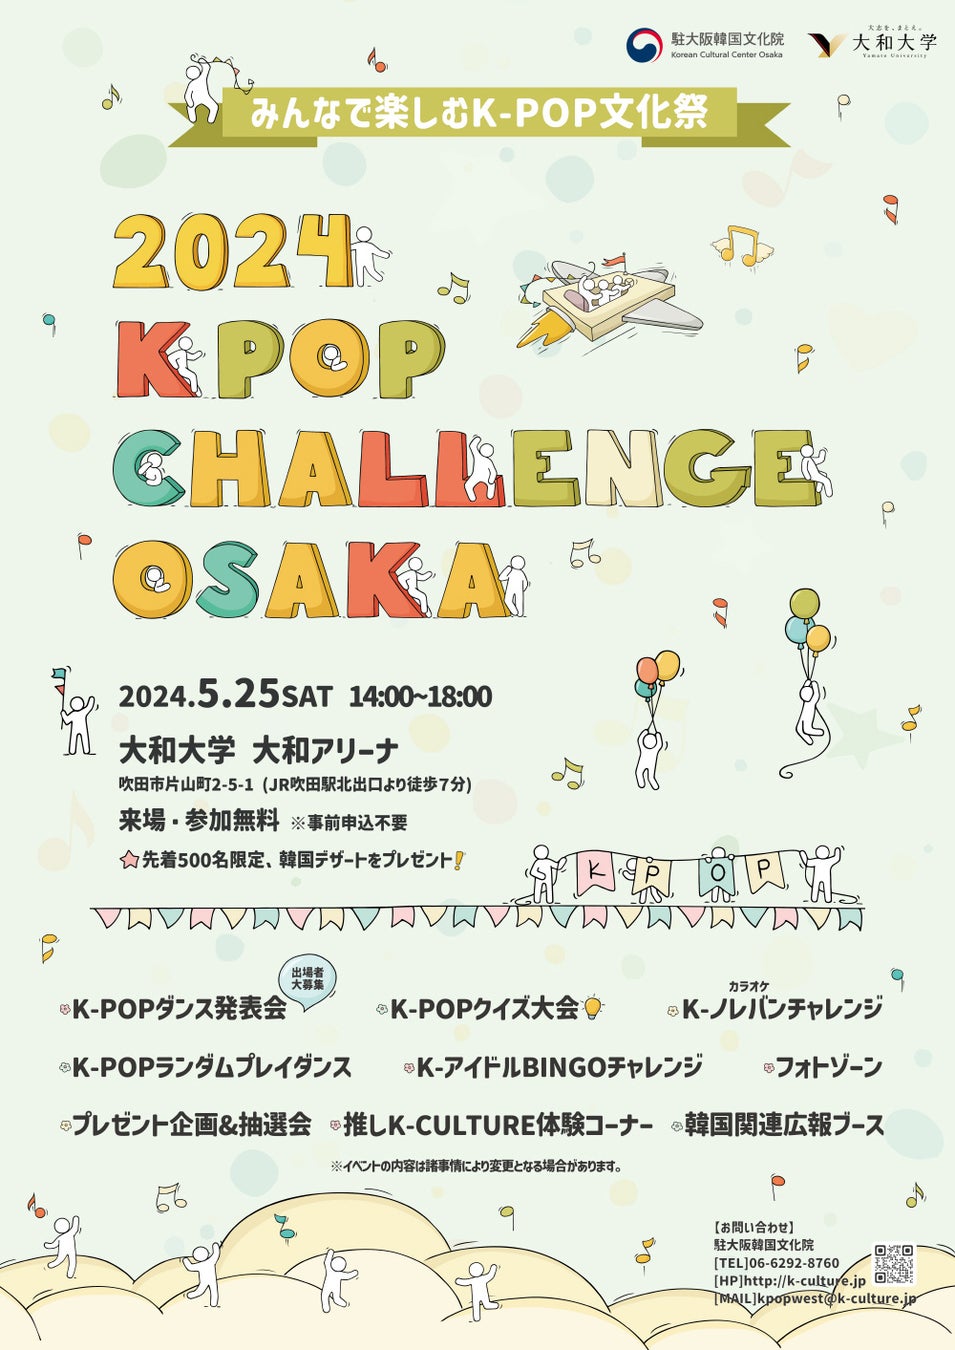 K-POPファンが一日中楽しめる参加型イベント「2024 K-POP CHALLENGE OSAKA」開催